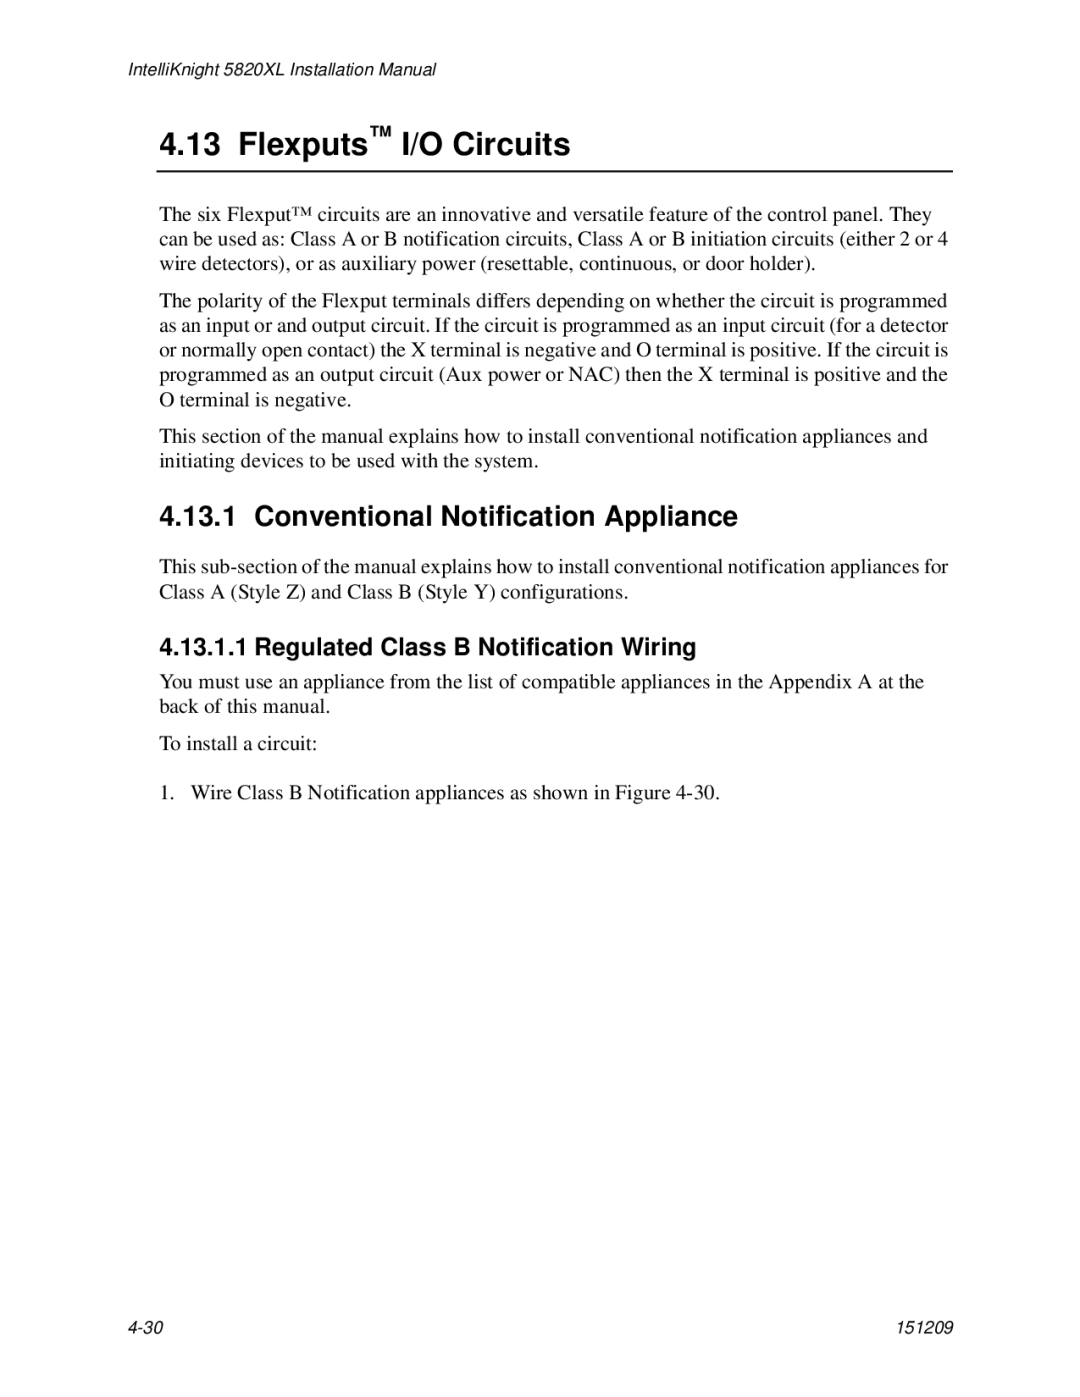 Honeywell 5820XL manual Flexputs I/O Circuits, Conventional Notification Appliance, Regulated Class B Notification Wiring 